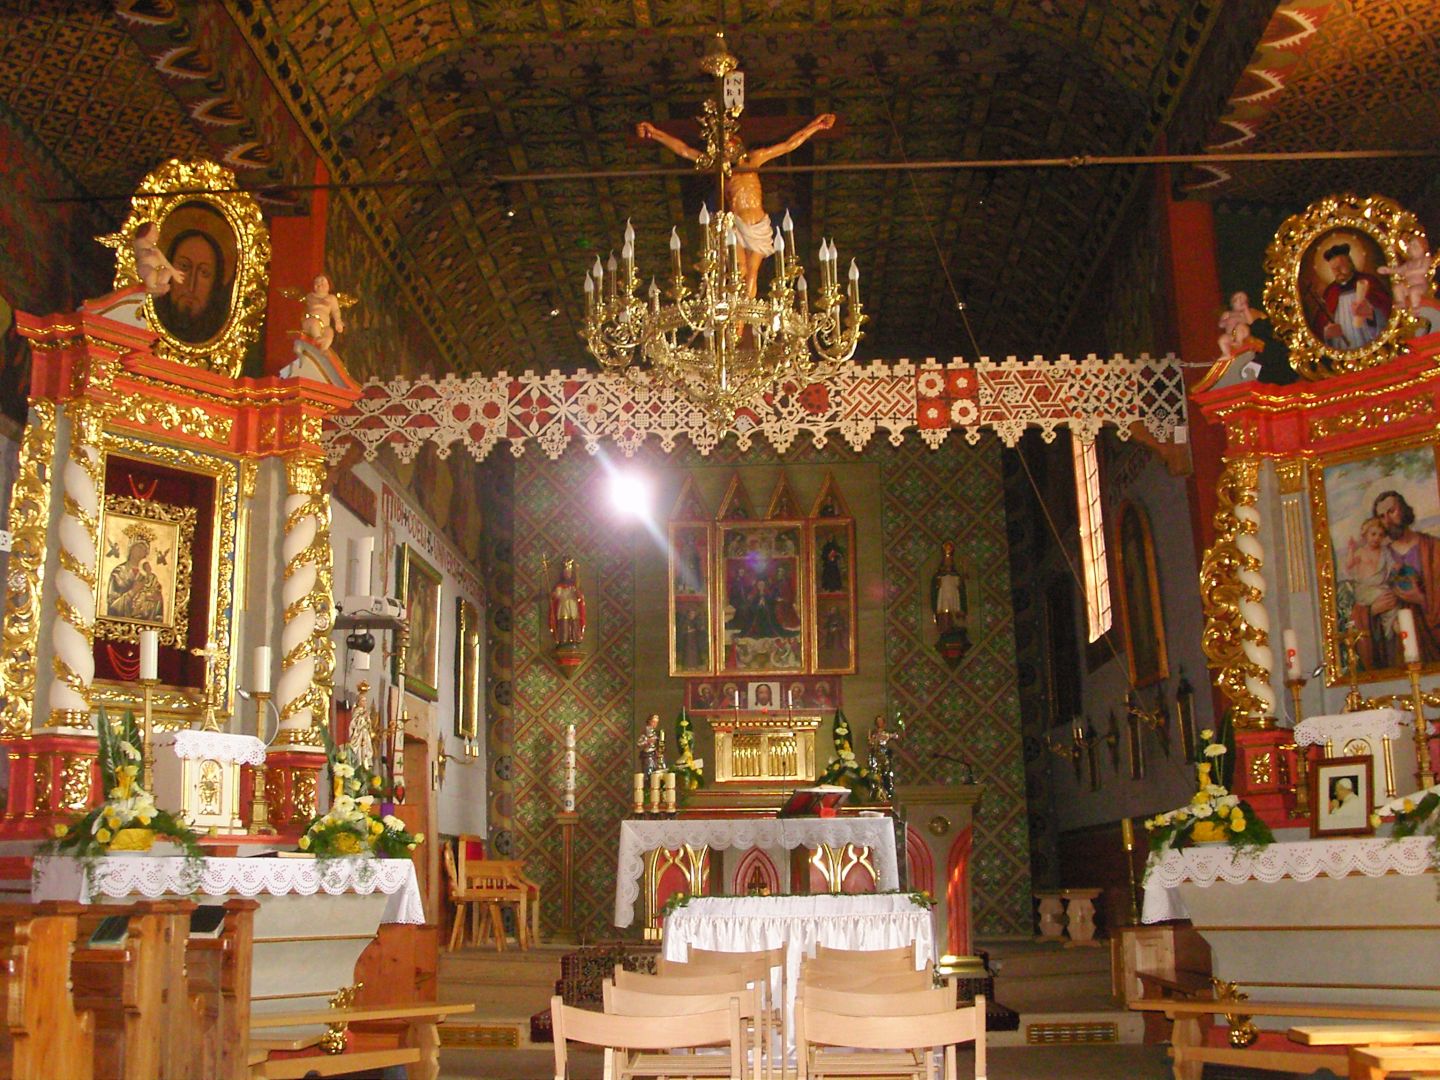 Holy Trinity Church and St. Antoni Abbot